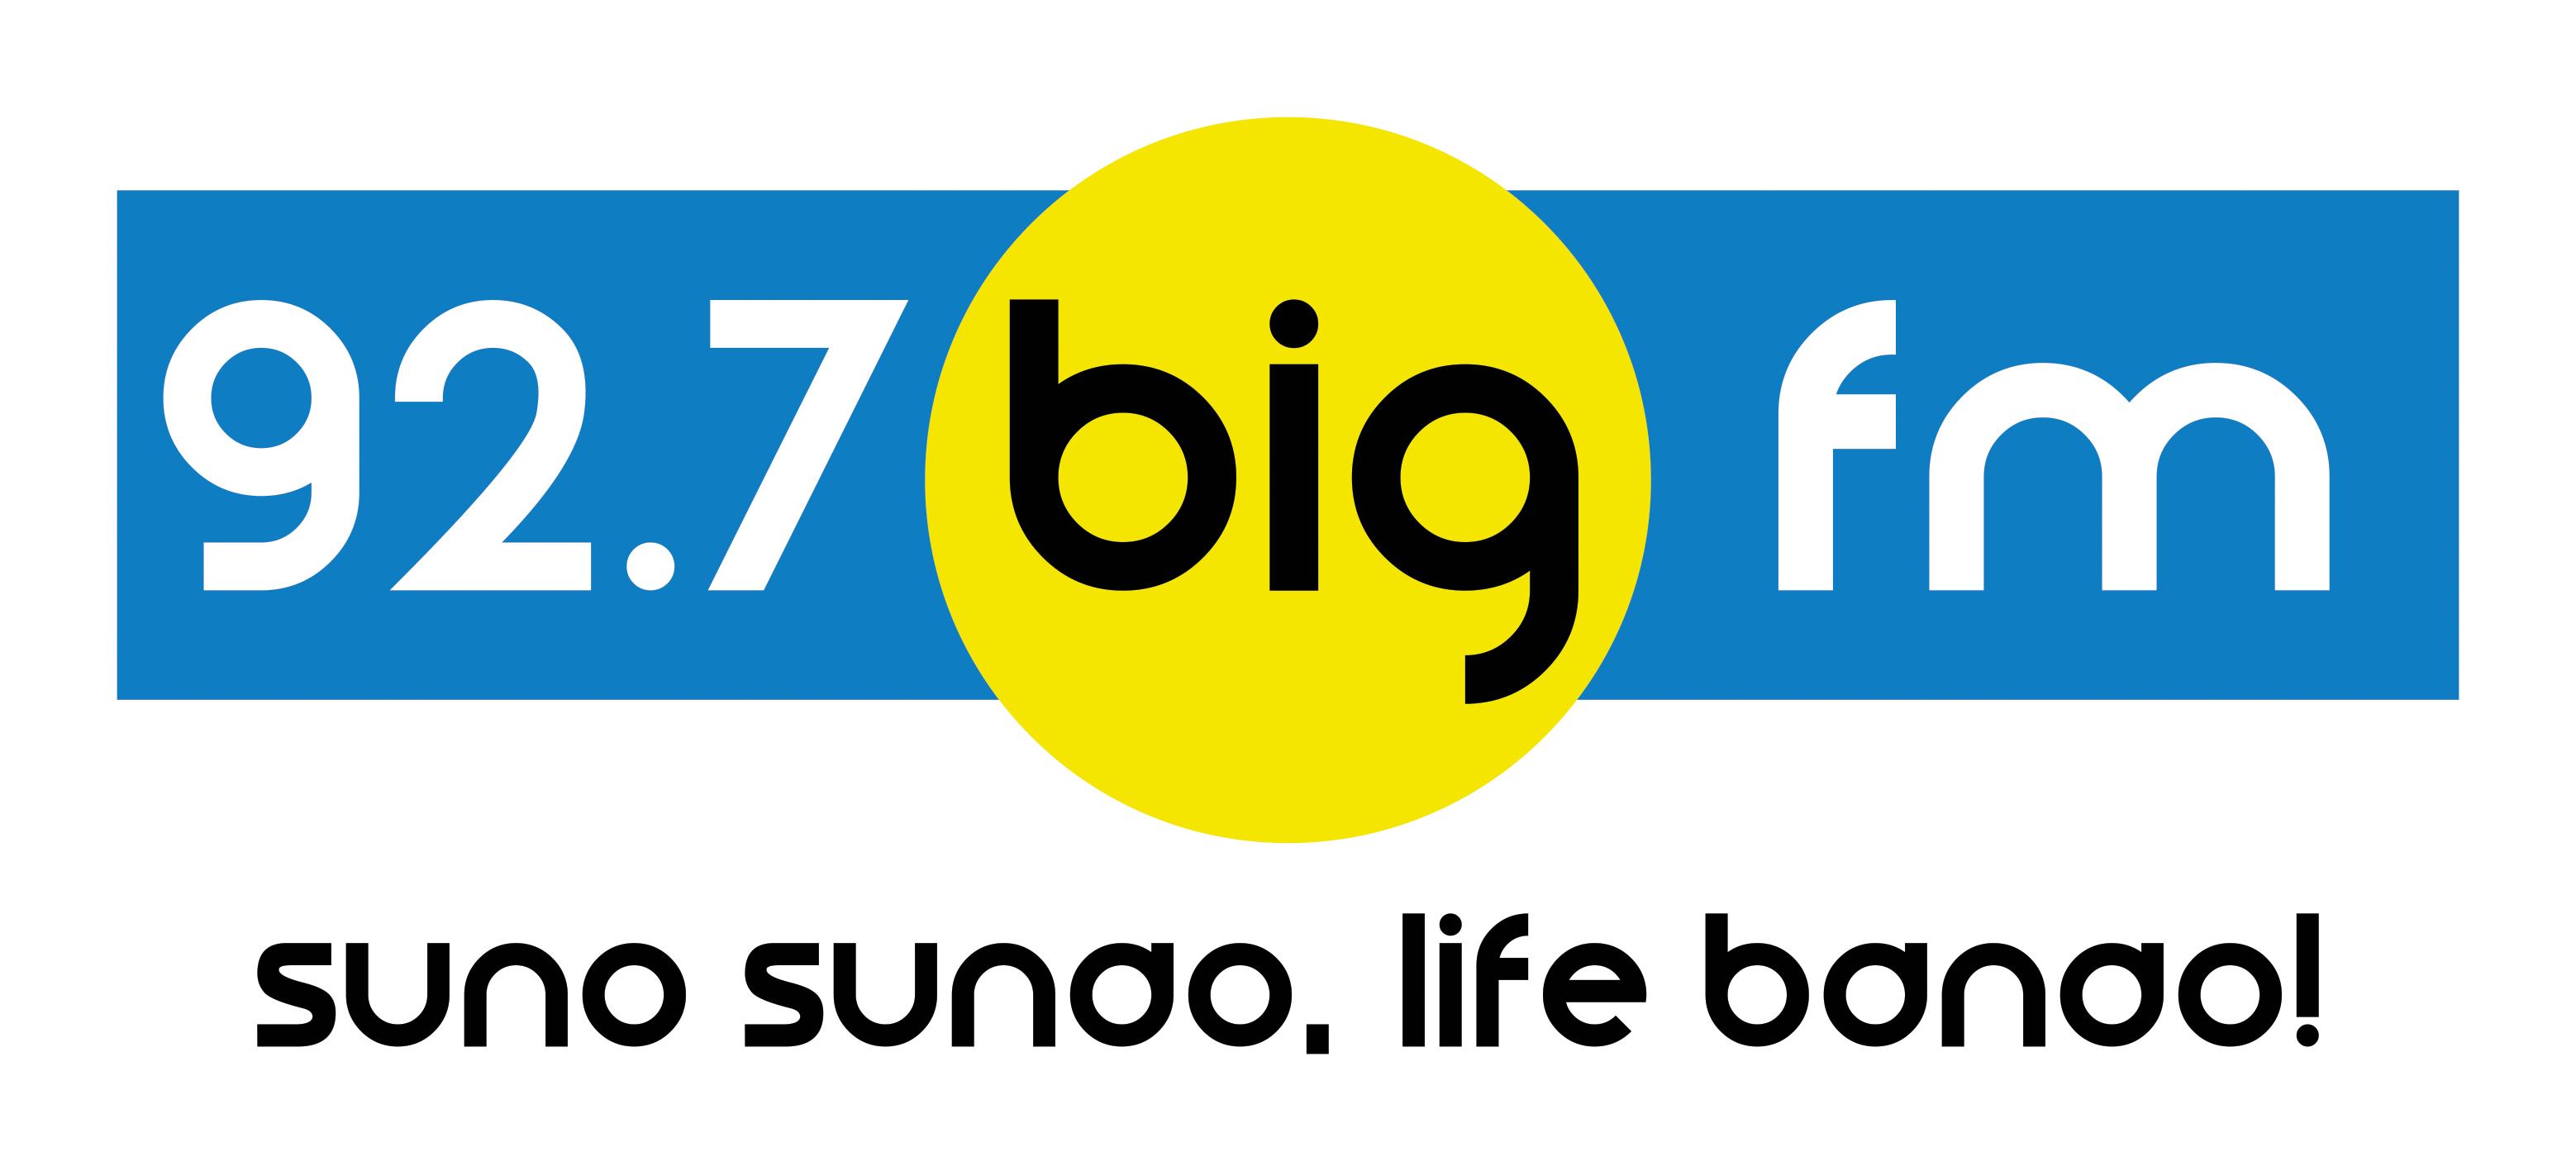 92.7 BIG FM Logo